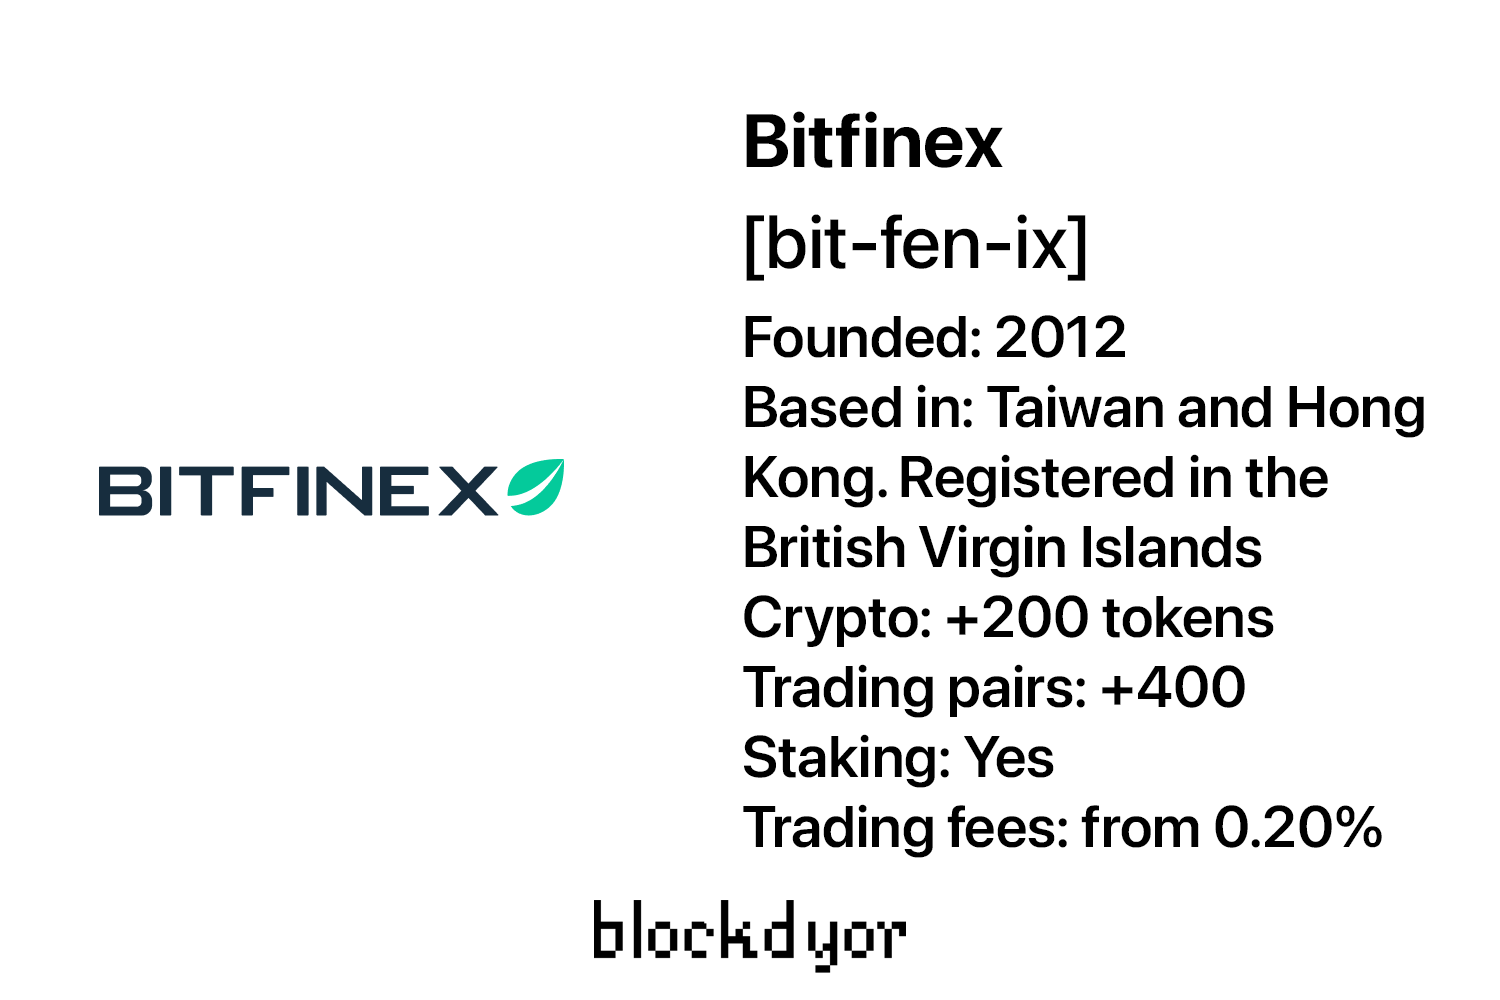 Bitfinex Overview